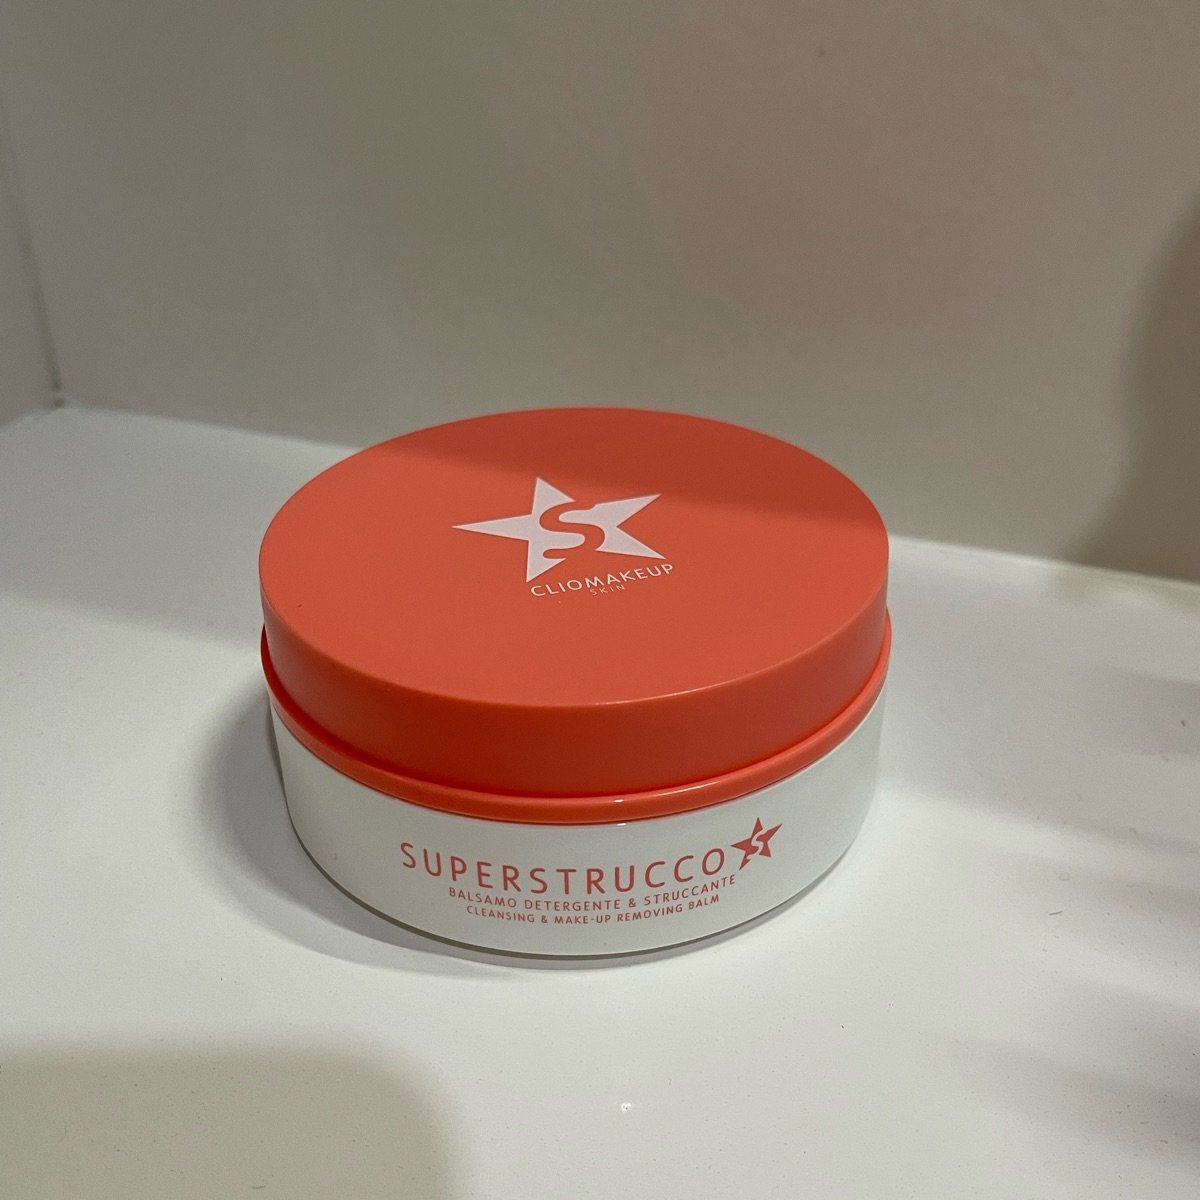 Clio Makeup Superstrucco balsamo detergente e struccante Reviews | abillion